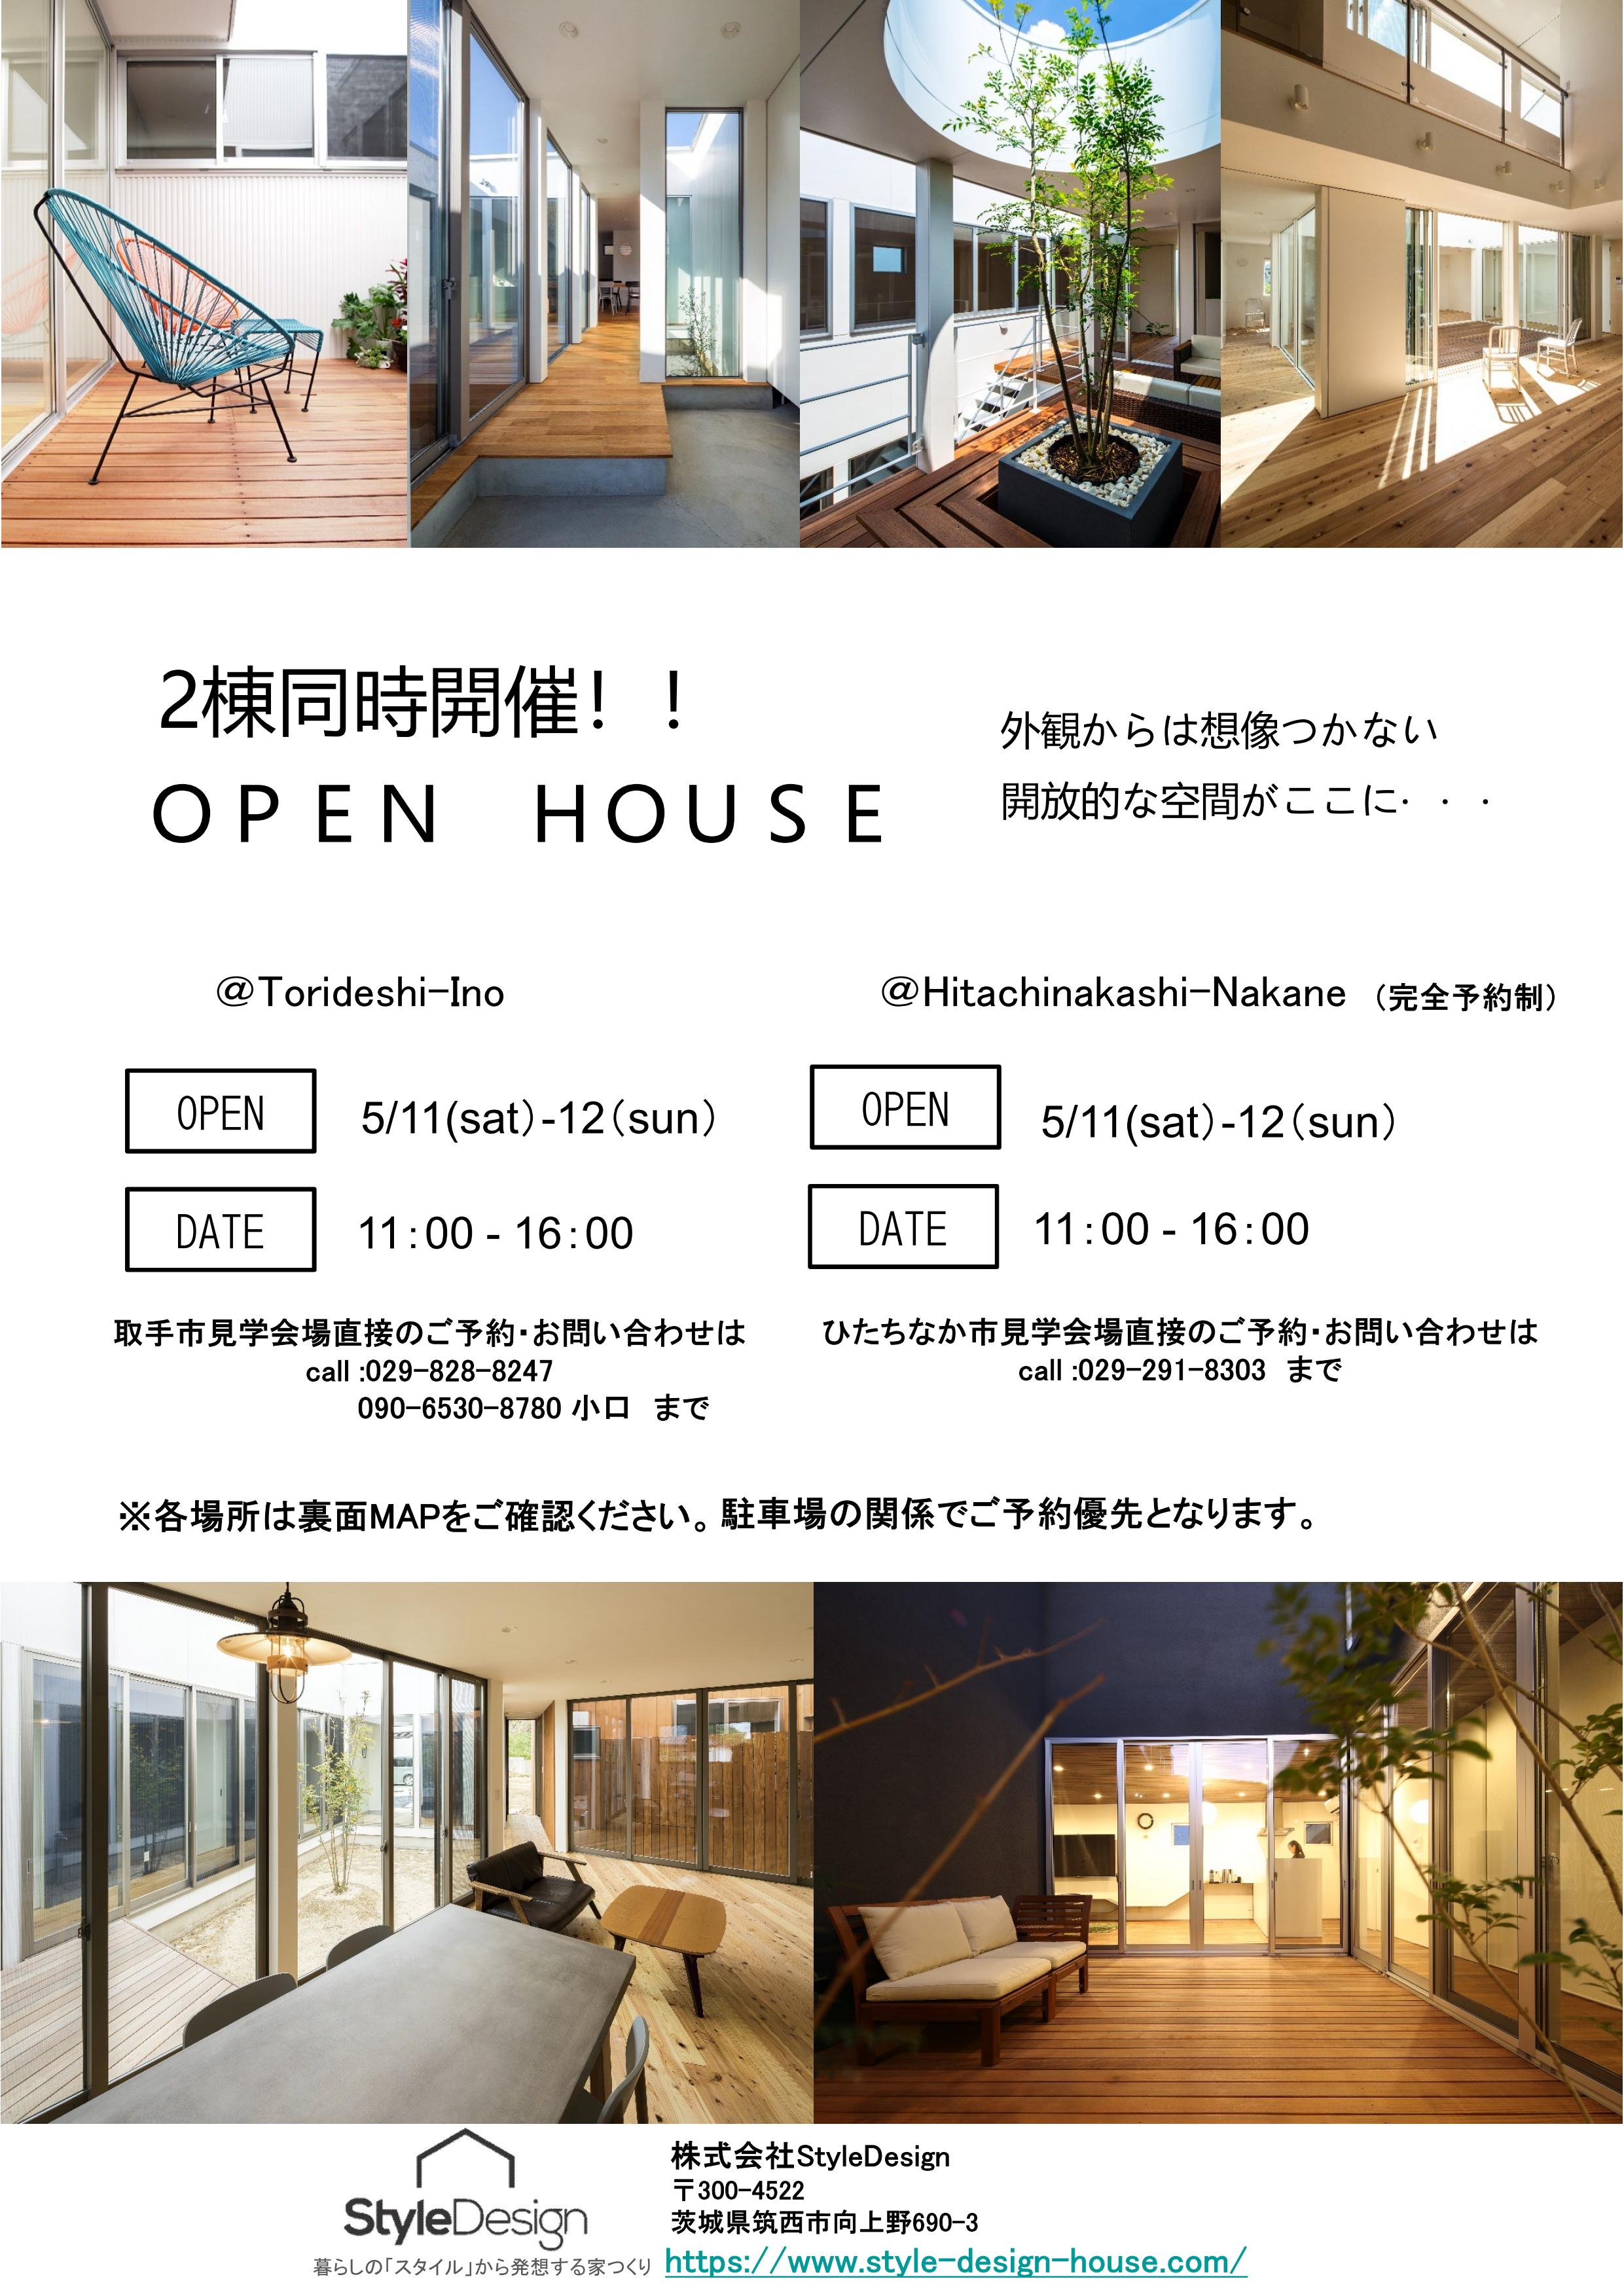 OPEN HOUSE「開放的デザイナーズハウス」in 茨城県取手市＆ひたちなか市